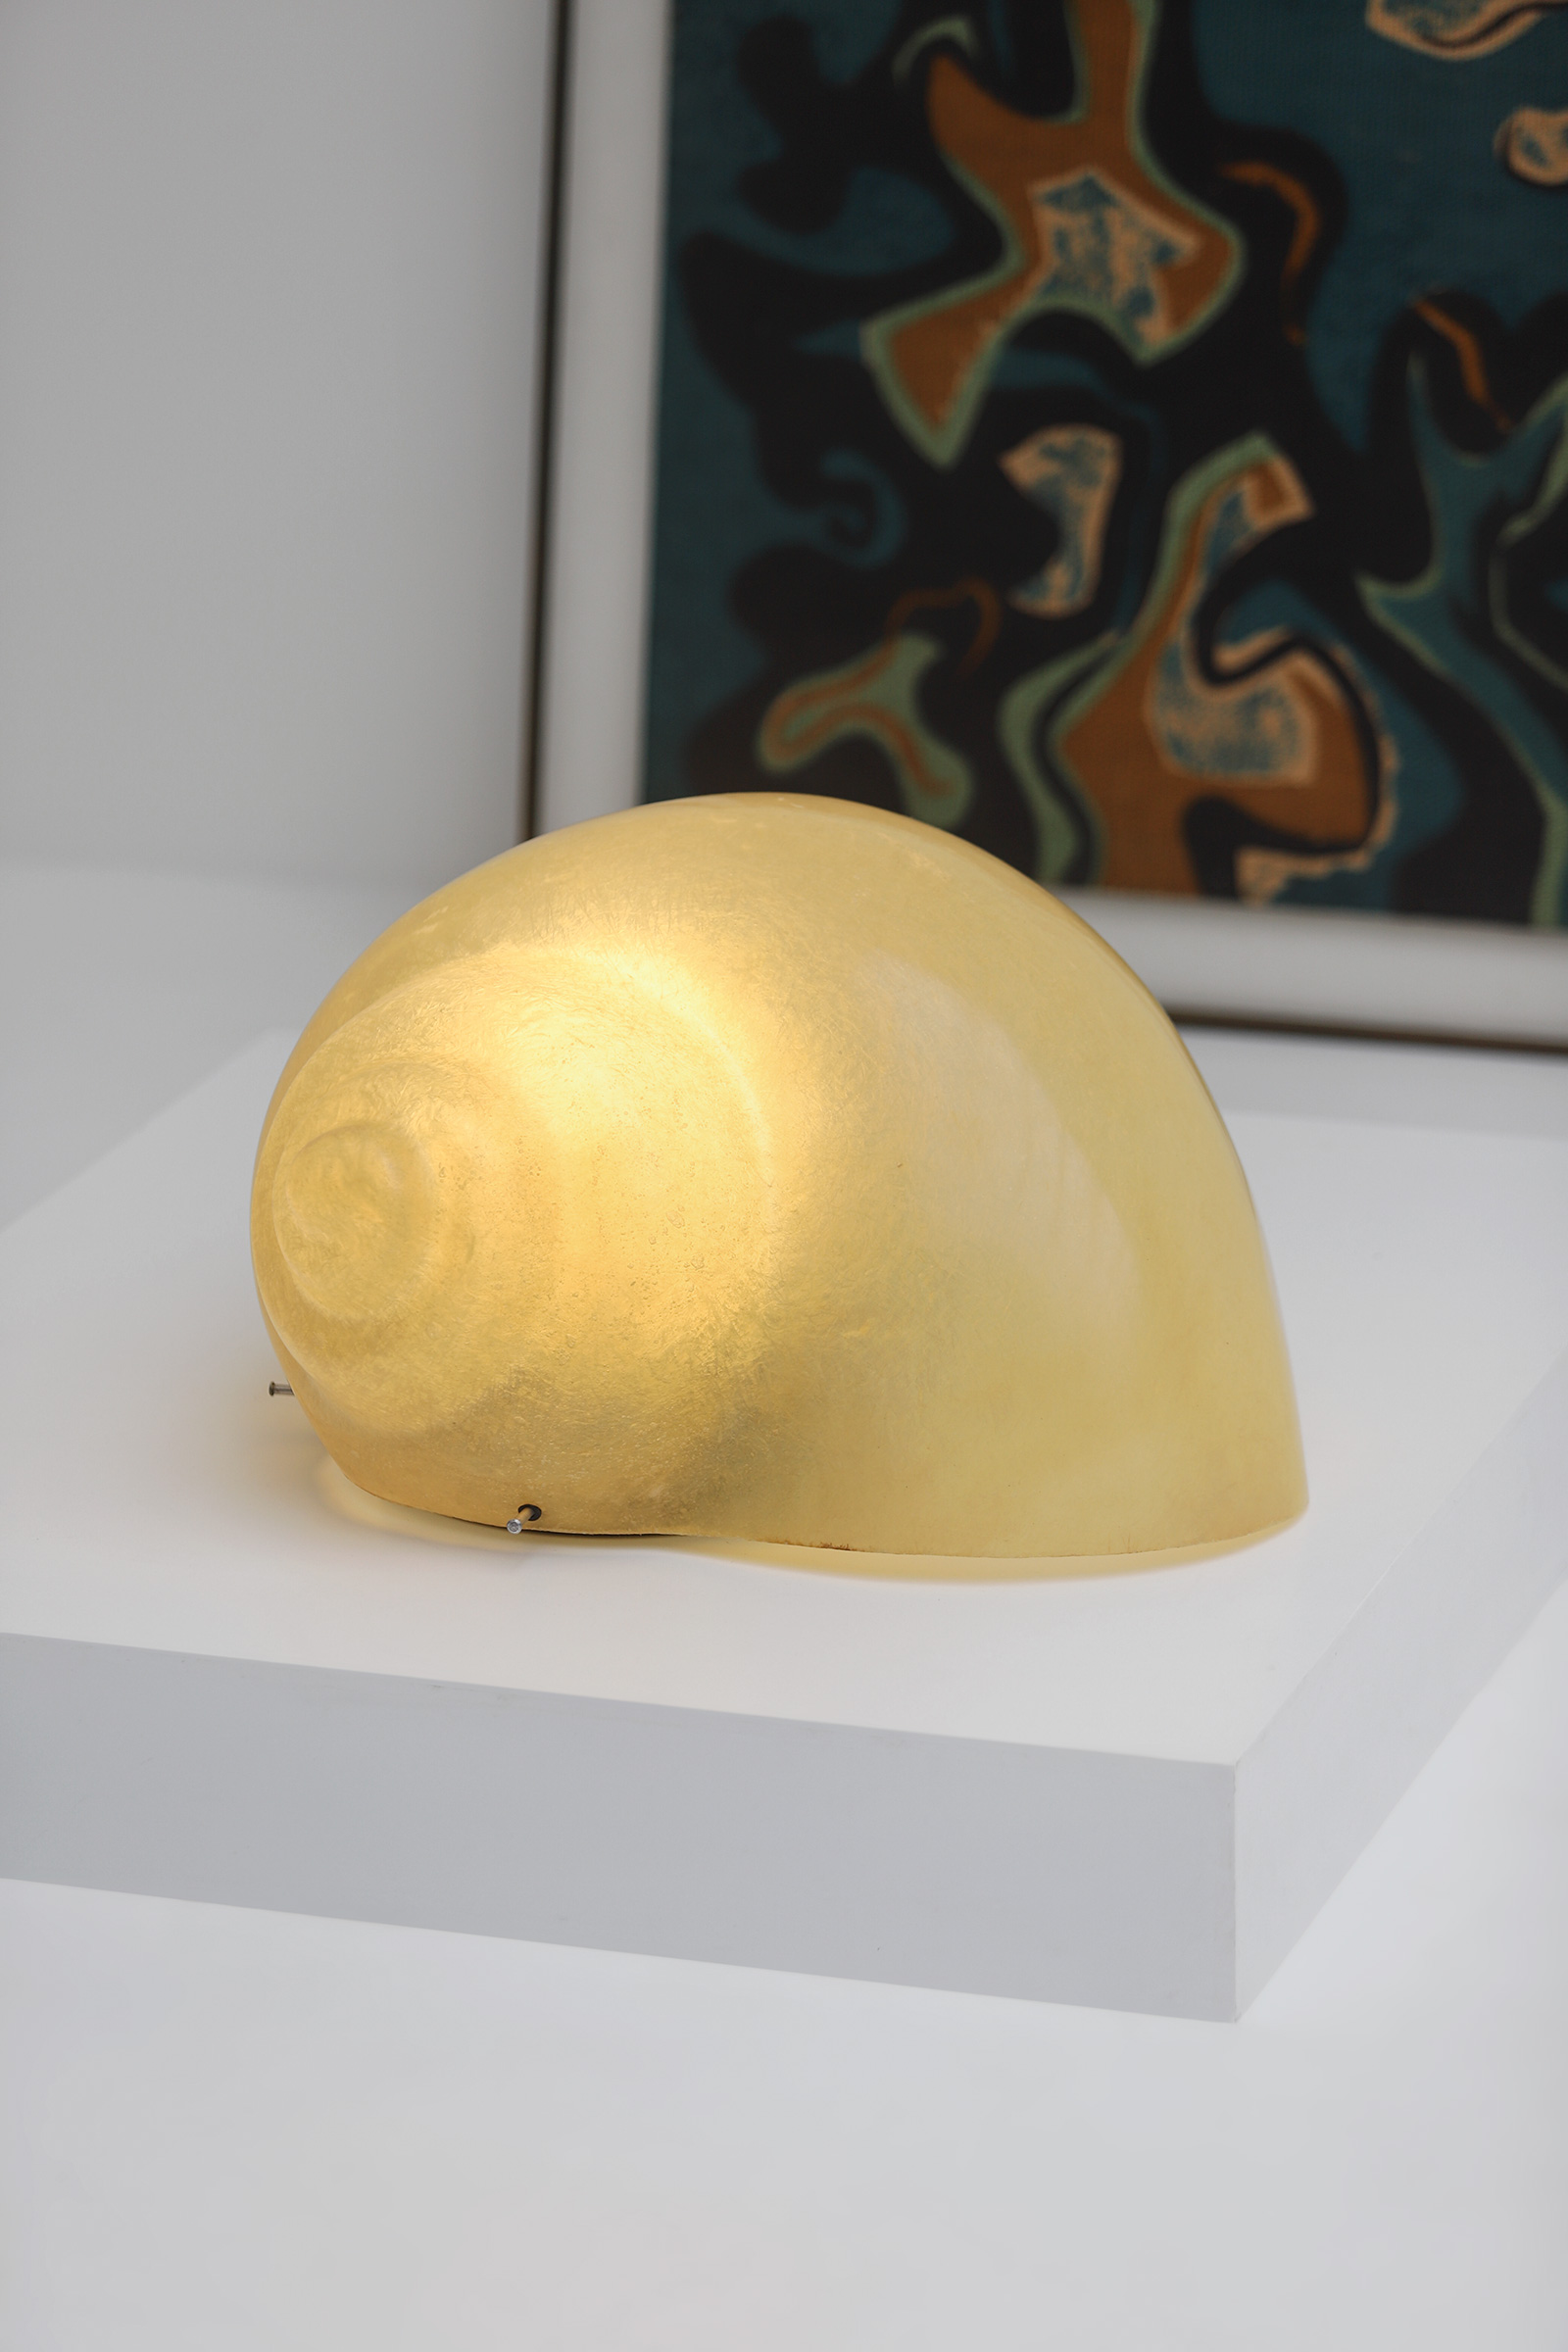 Sergio Camilli Snail Lamp for Bieffeplast, Italy, 1974image 2